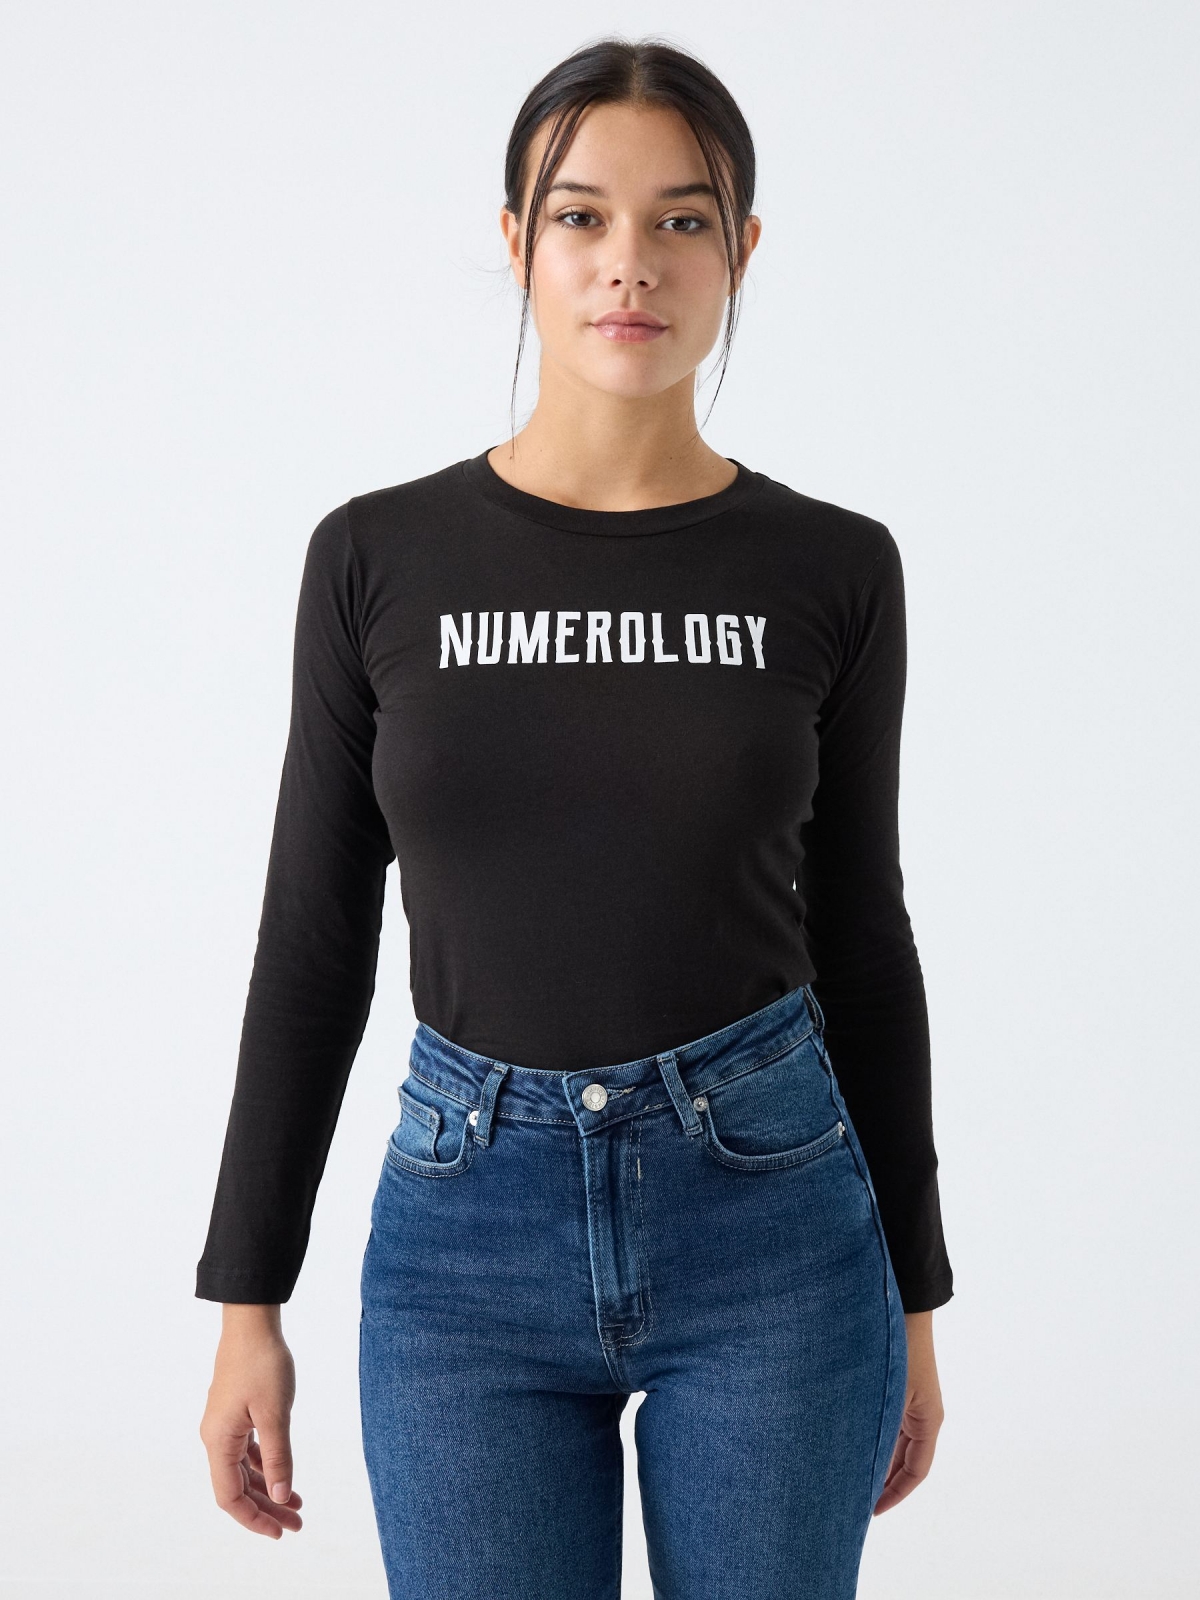 Camiseta negra numerology negro vista media frontal